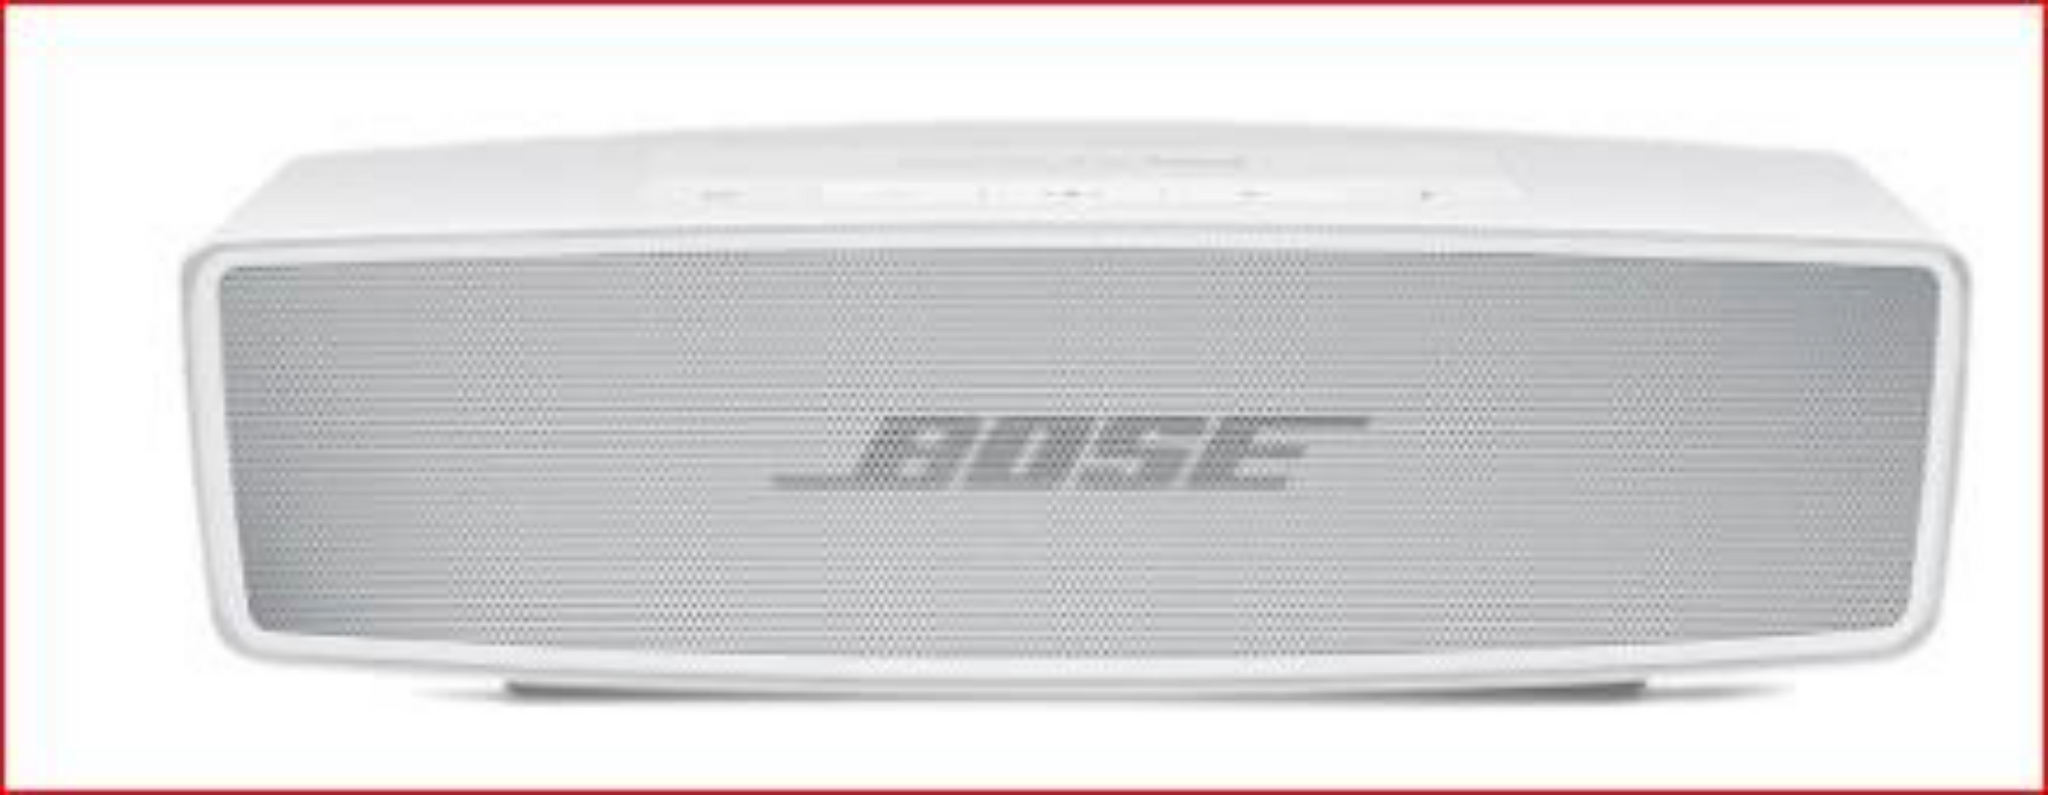 Bose SoundLink Mini II Bluetooth Wireless Speaker Limited Edition